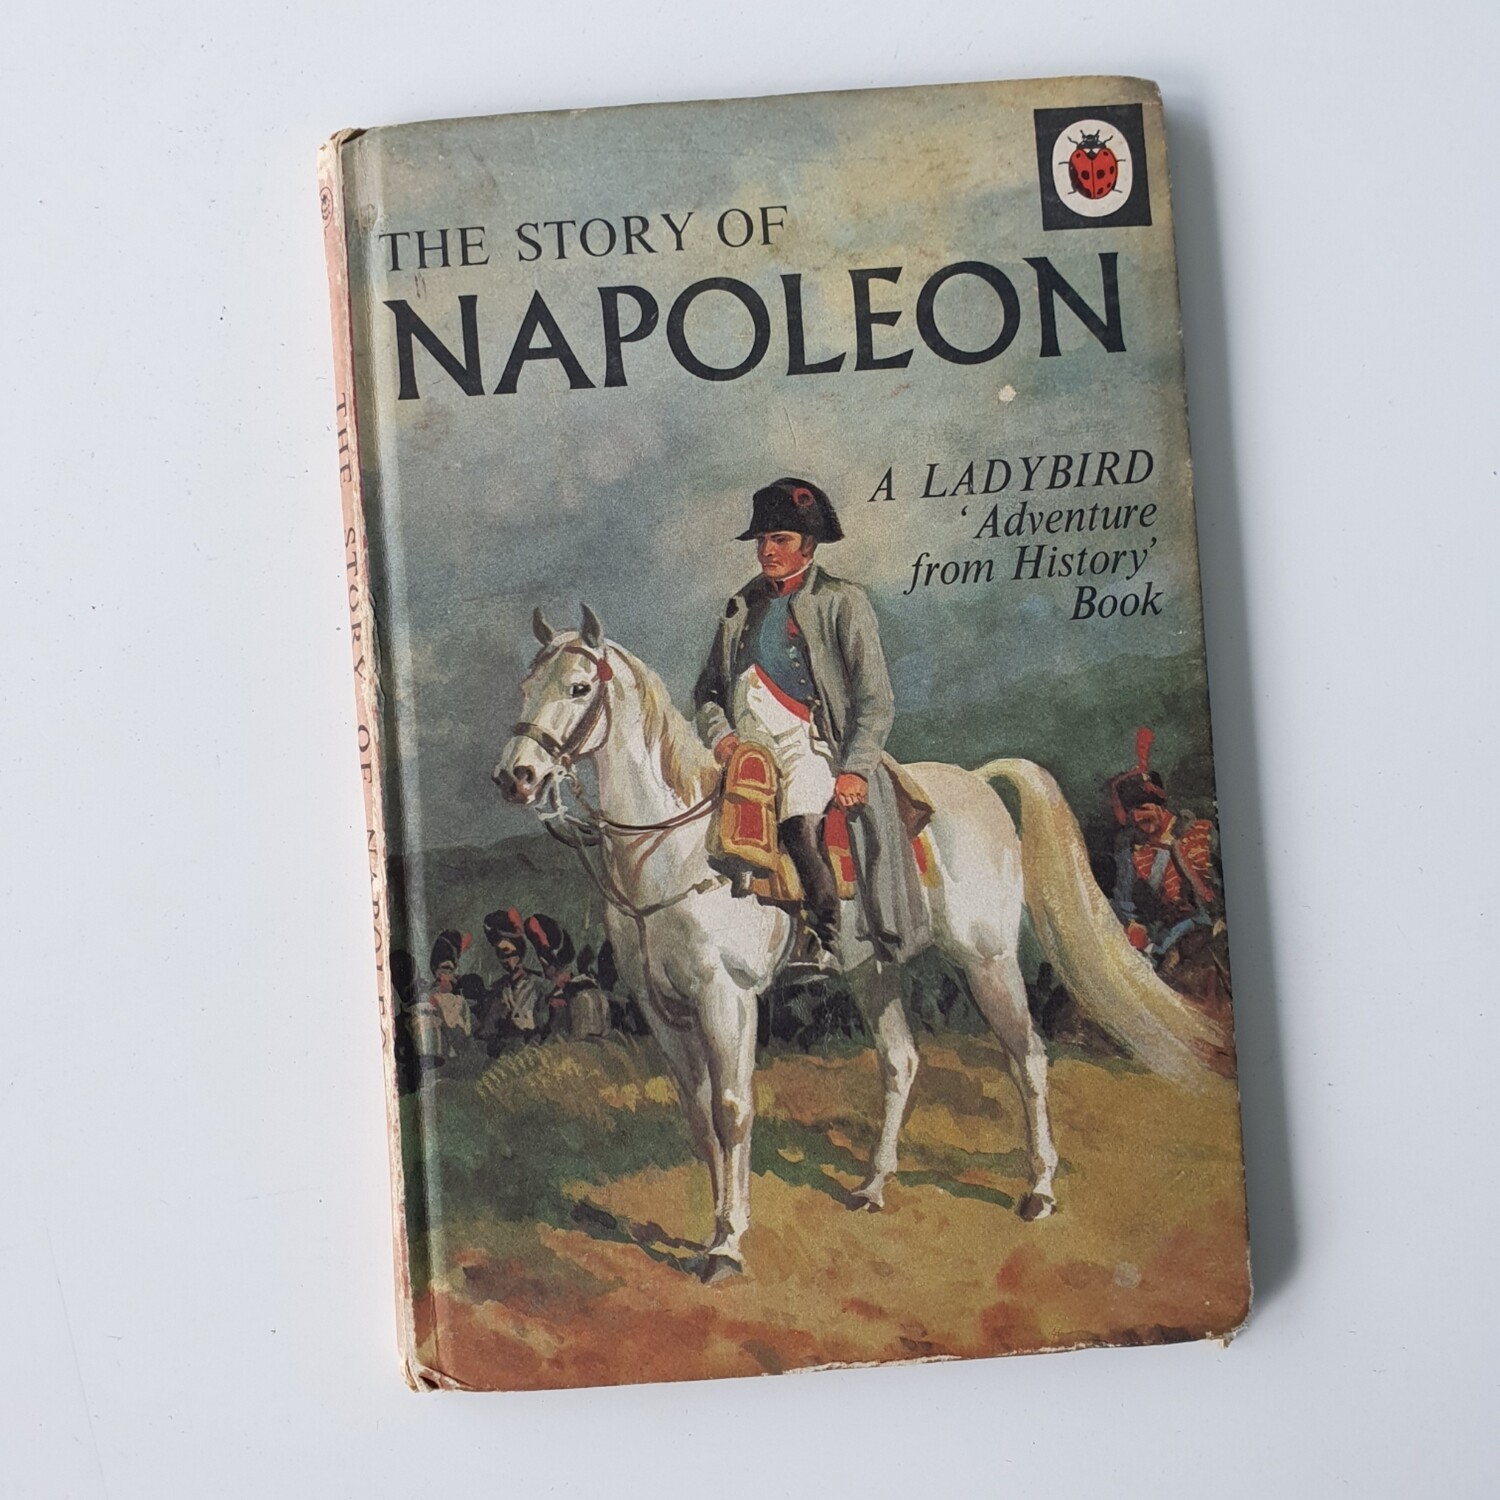 Napoleon - Ladybird book